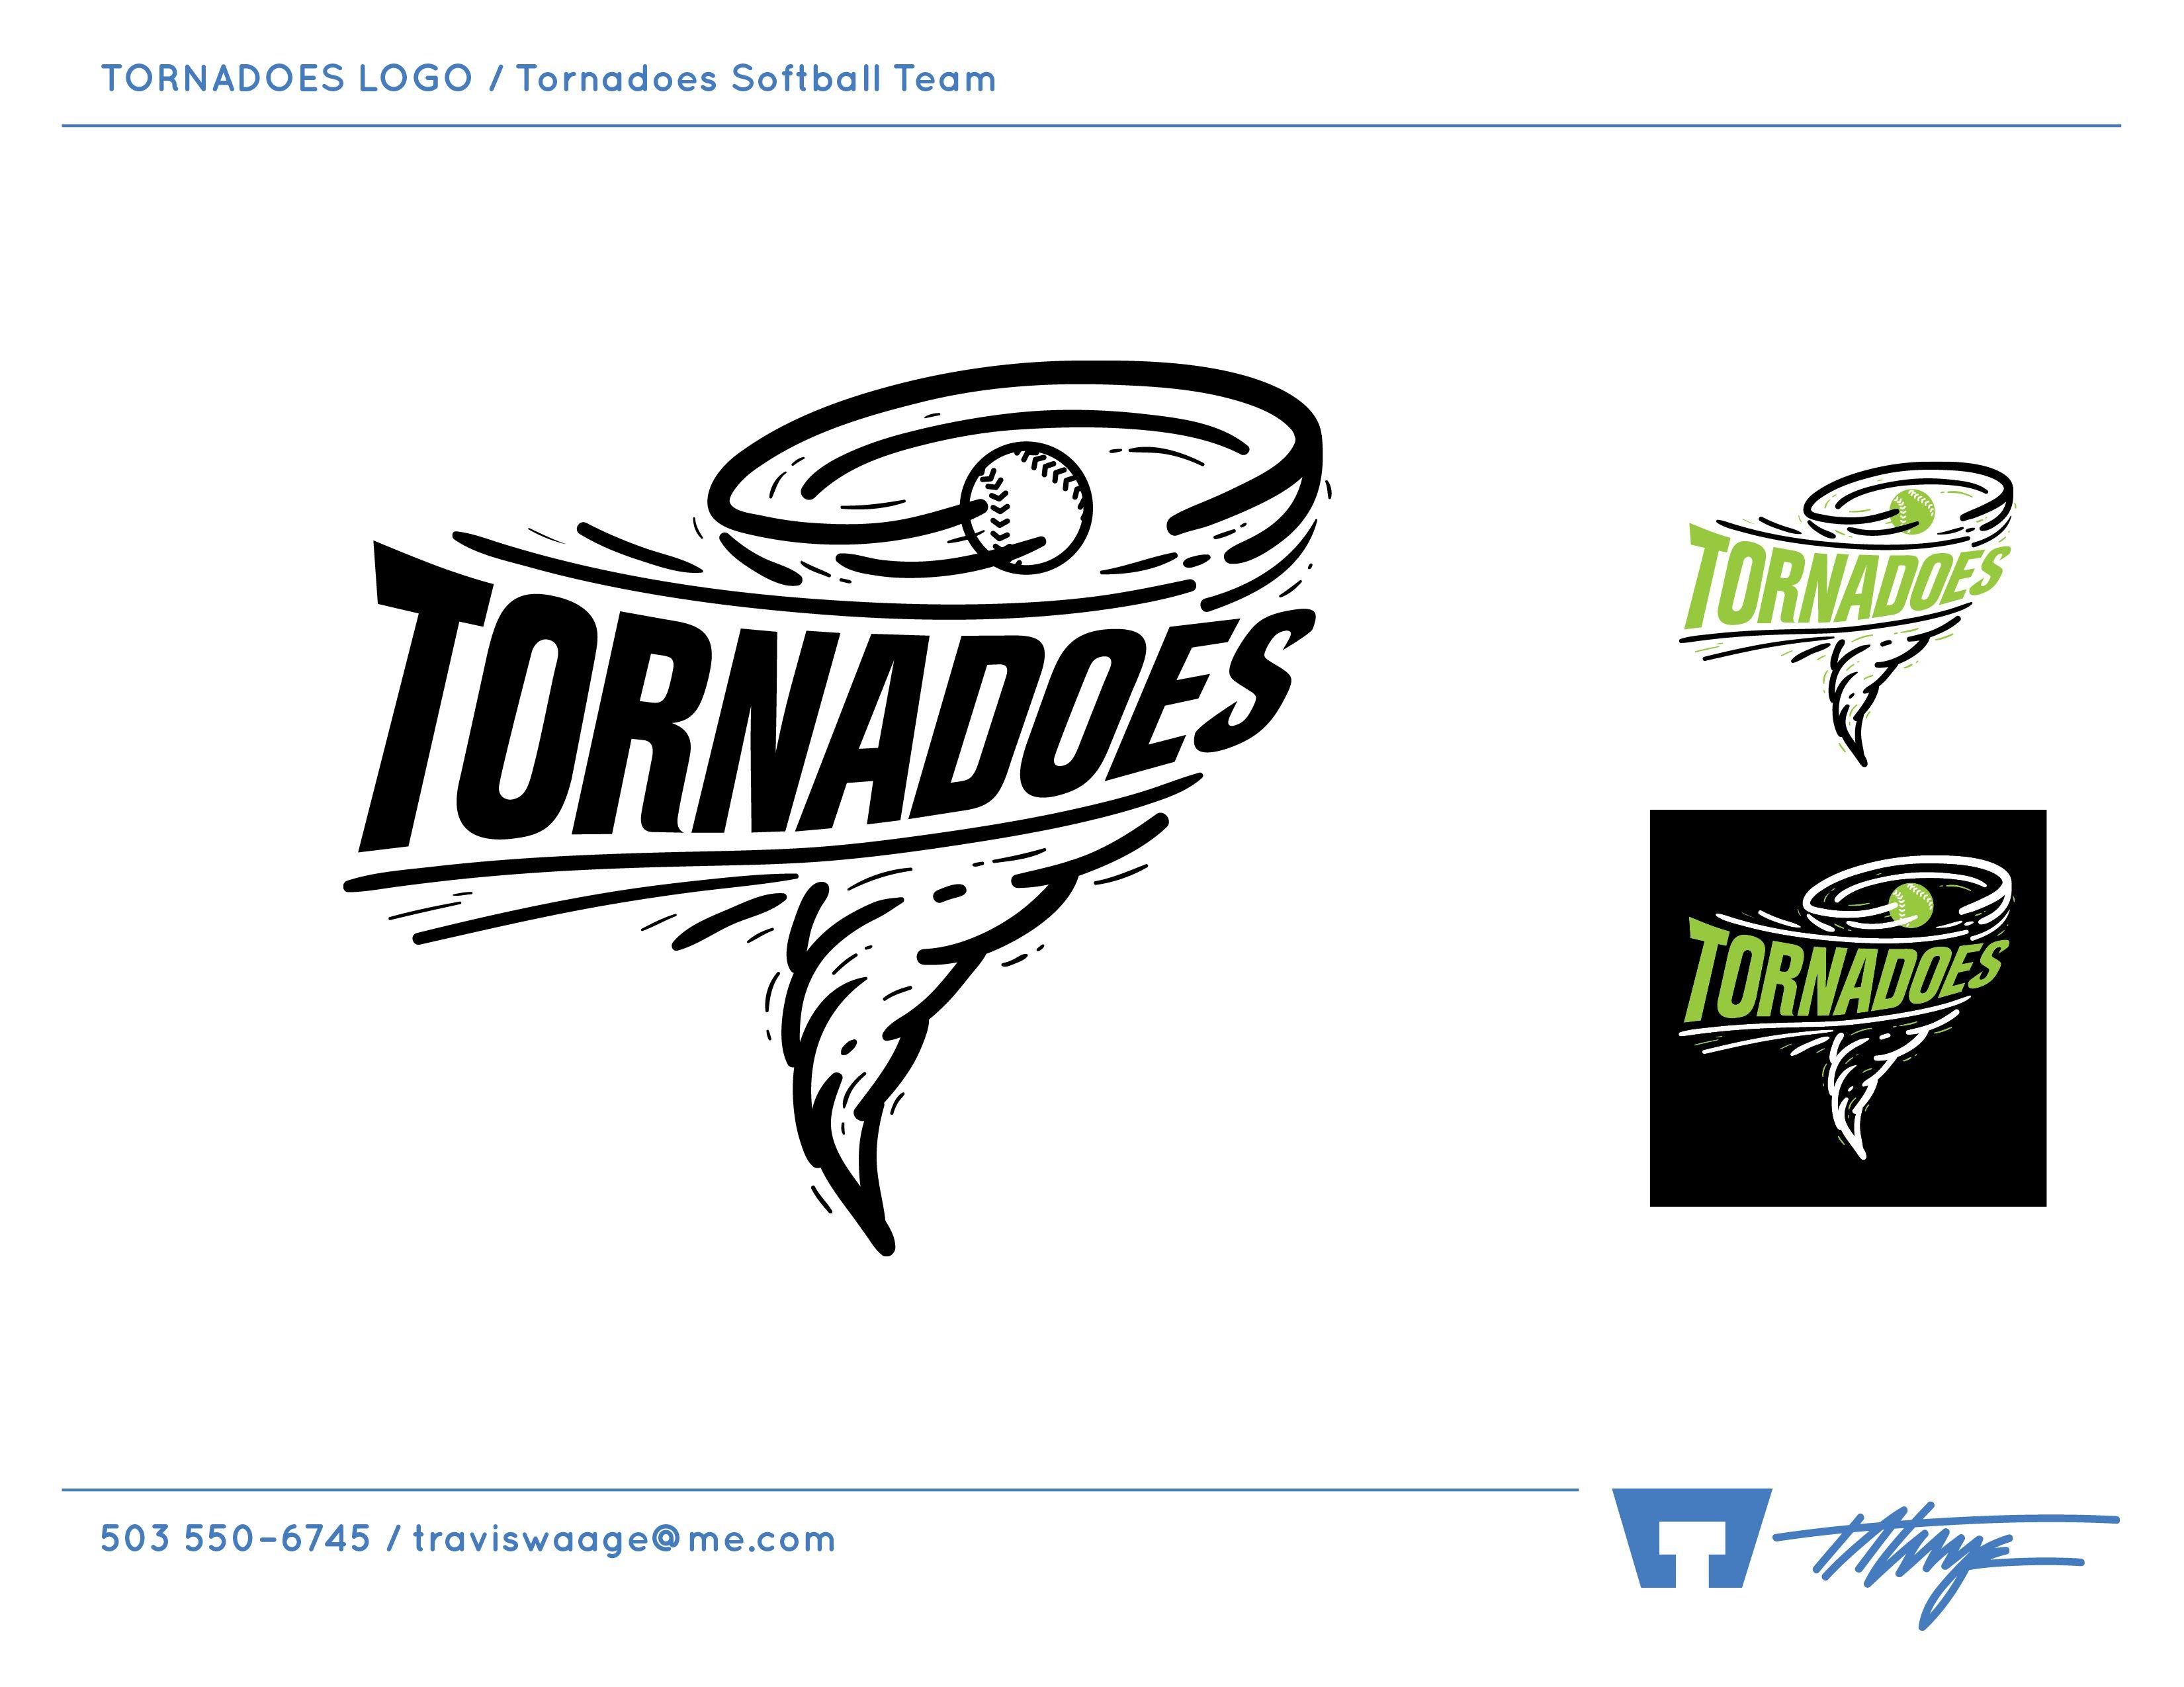 Tornadoes Logo - TORNADOES LOGO / Tornadoes Softball Team | Work Samples | Sports ...